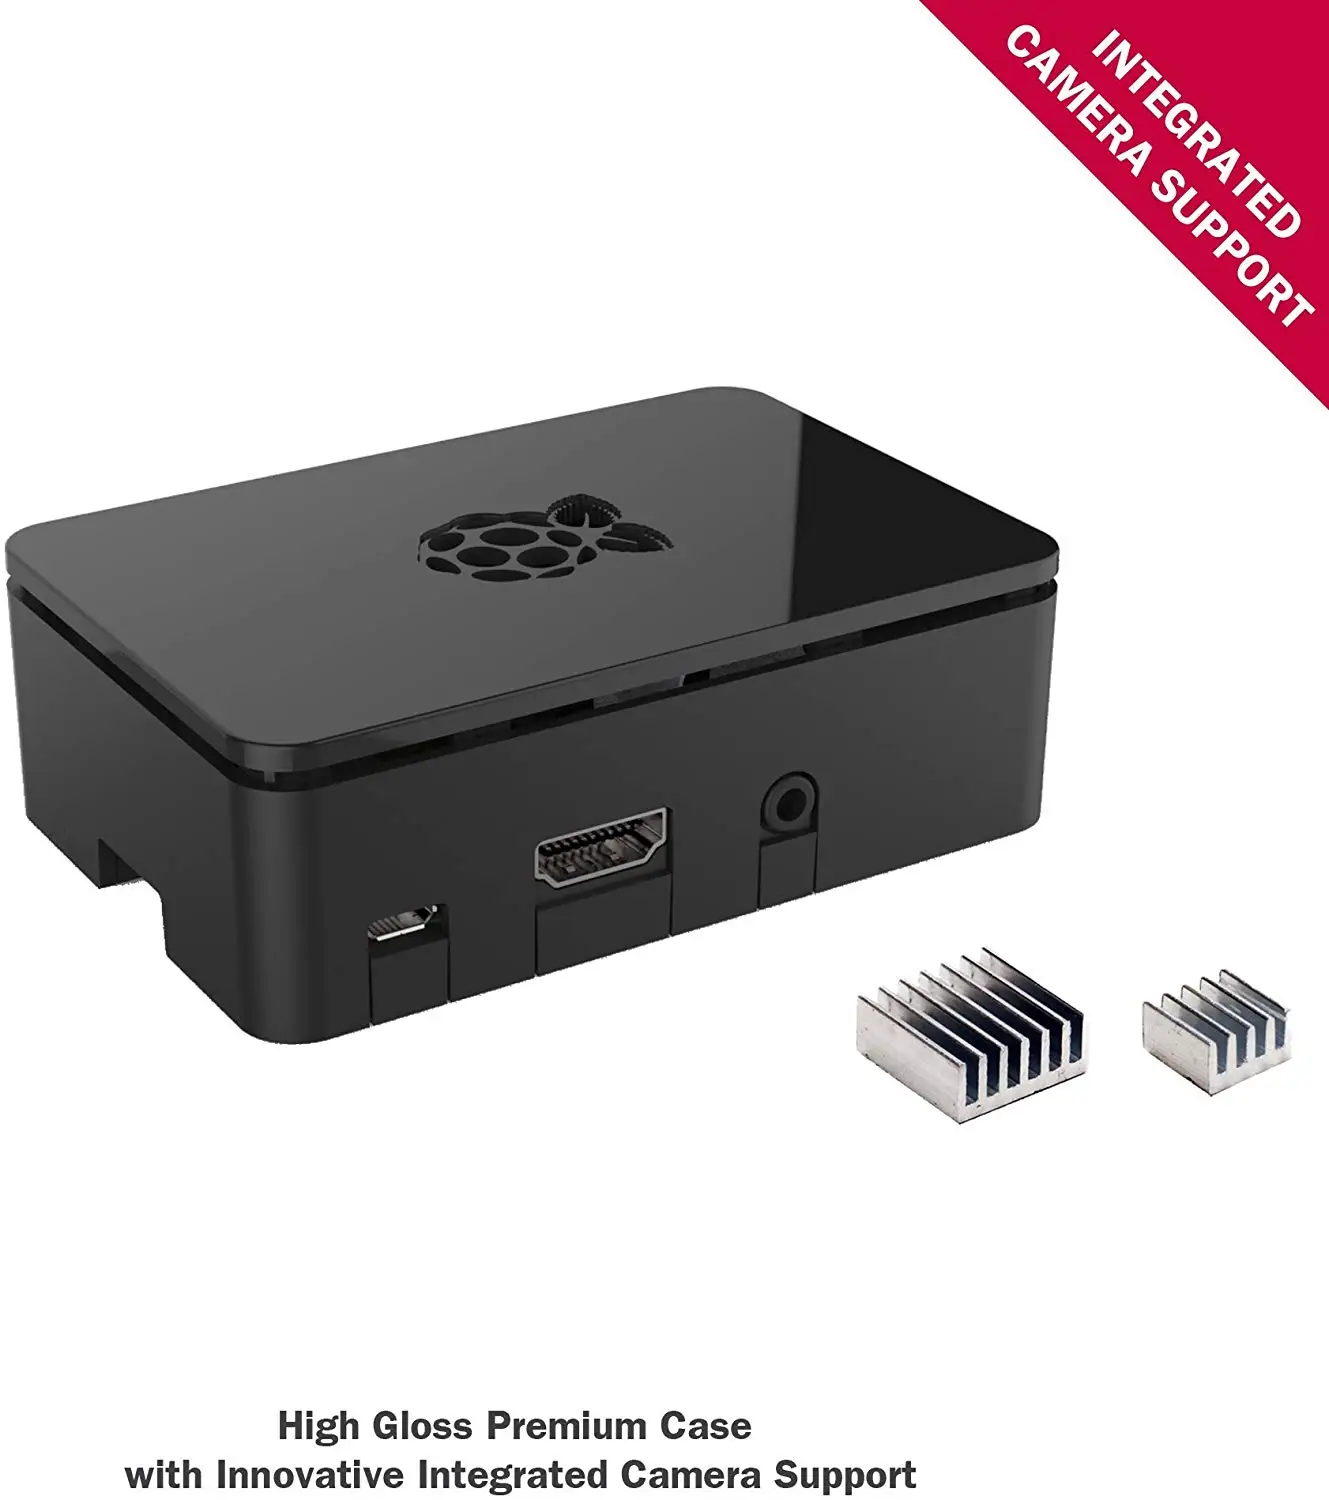 Raspberry Pi 3 B+ (b Plus) Starter Kit (32 Gb Evo+ Edition,Premium Black  Case) - Buy Canakit Raspberry Pi 3 B+,Canakit Raspberry Pi 3 B Plus With